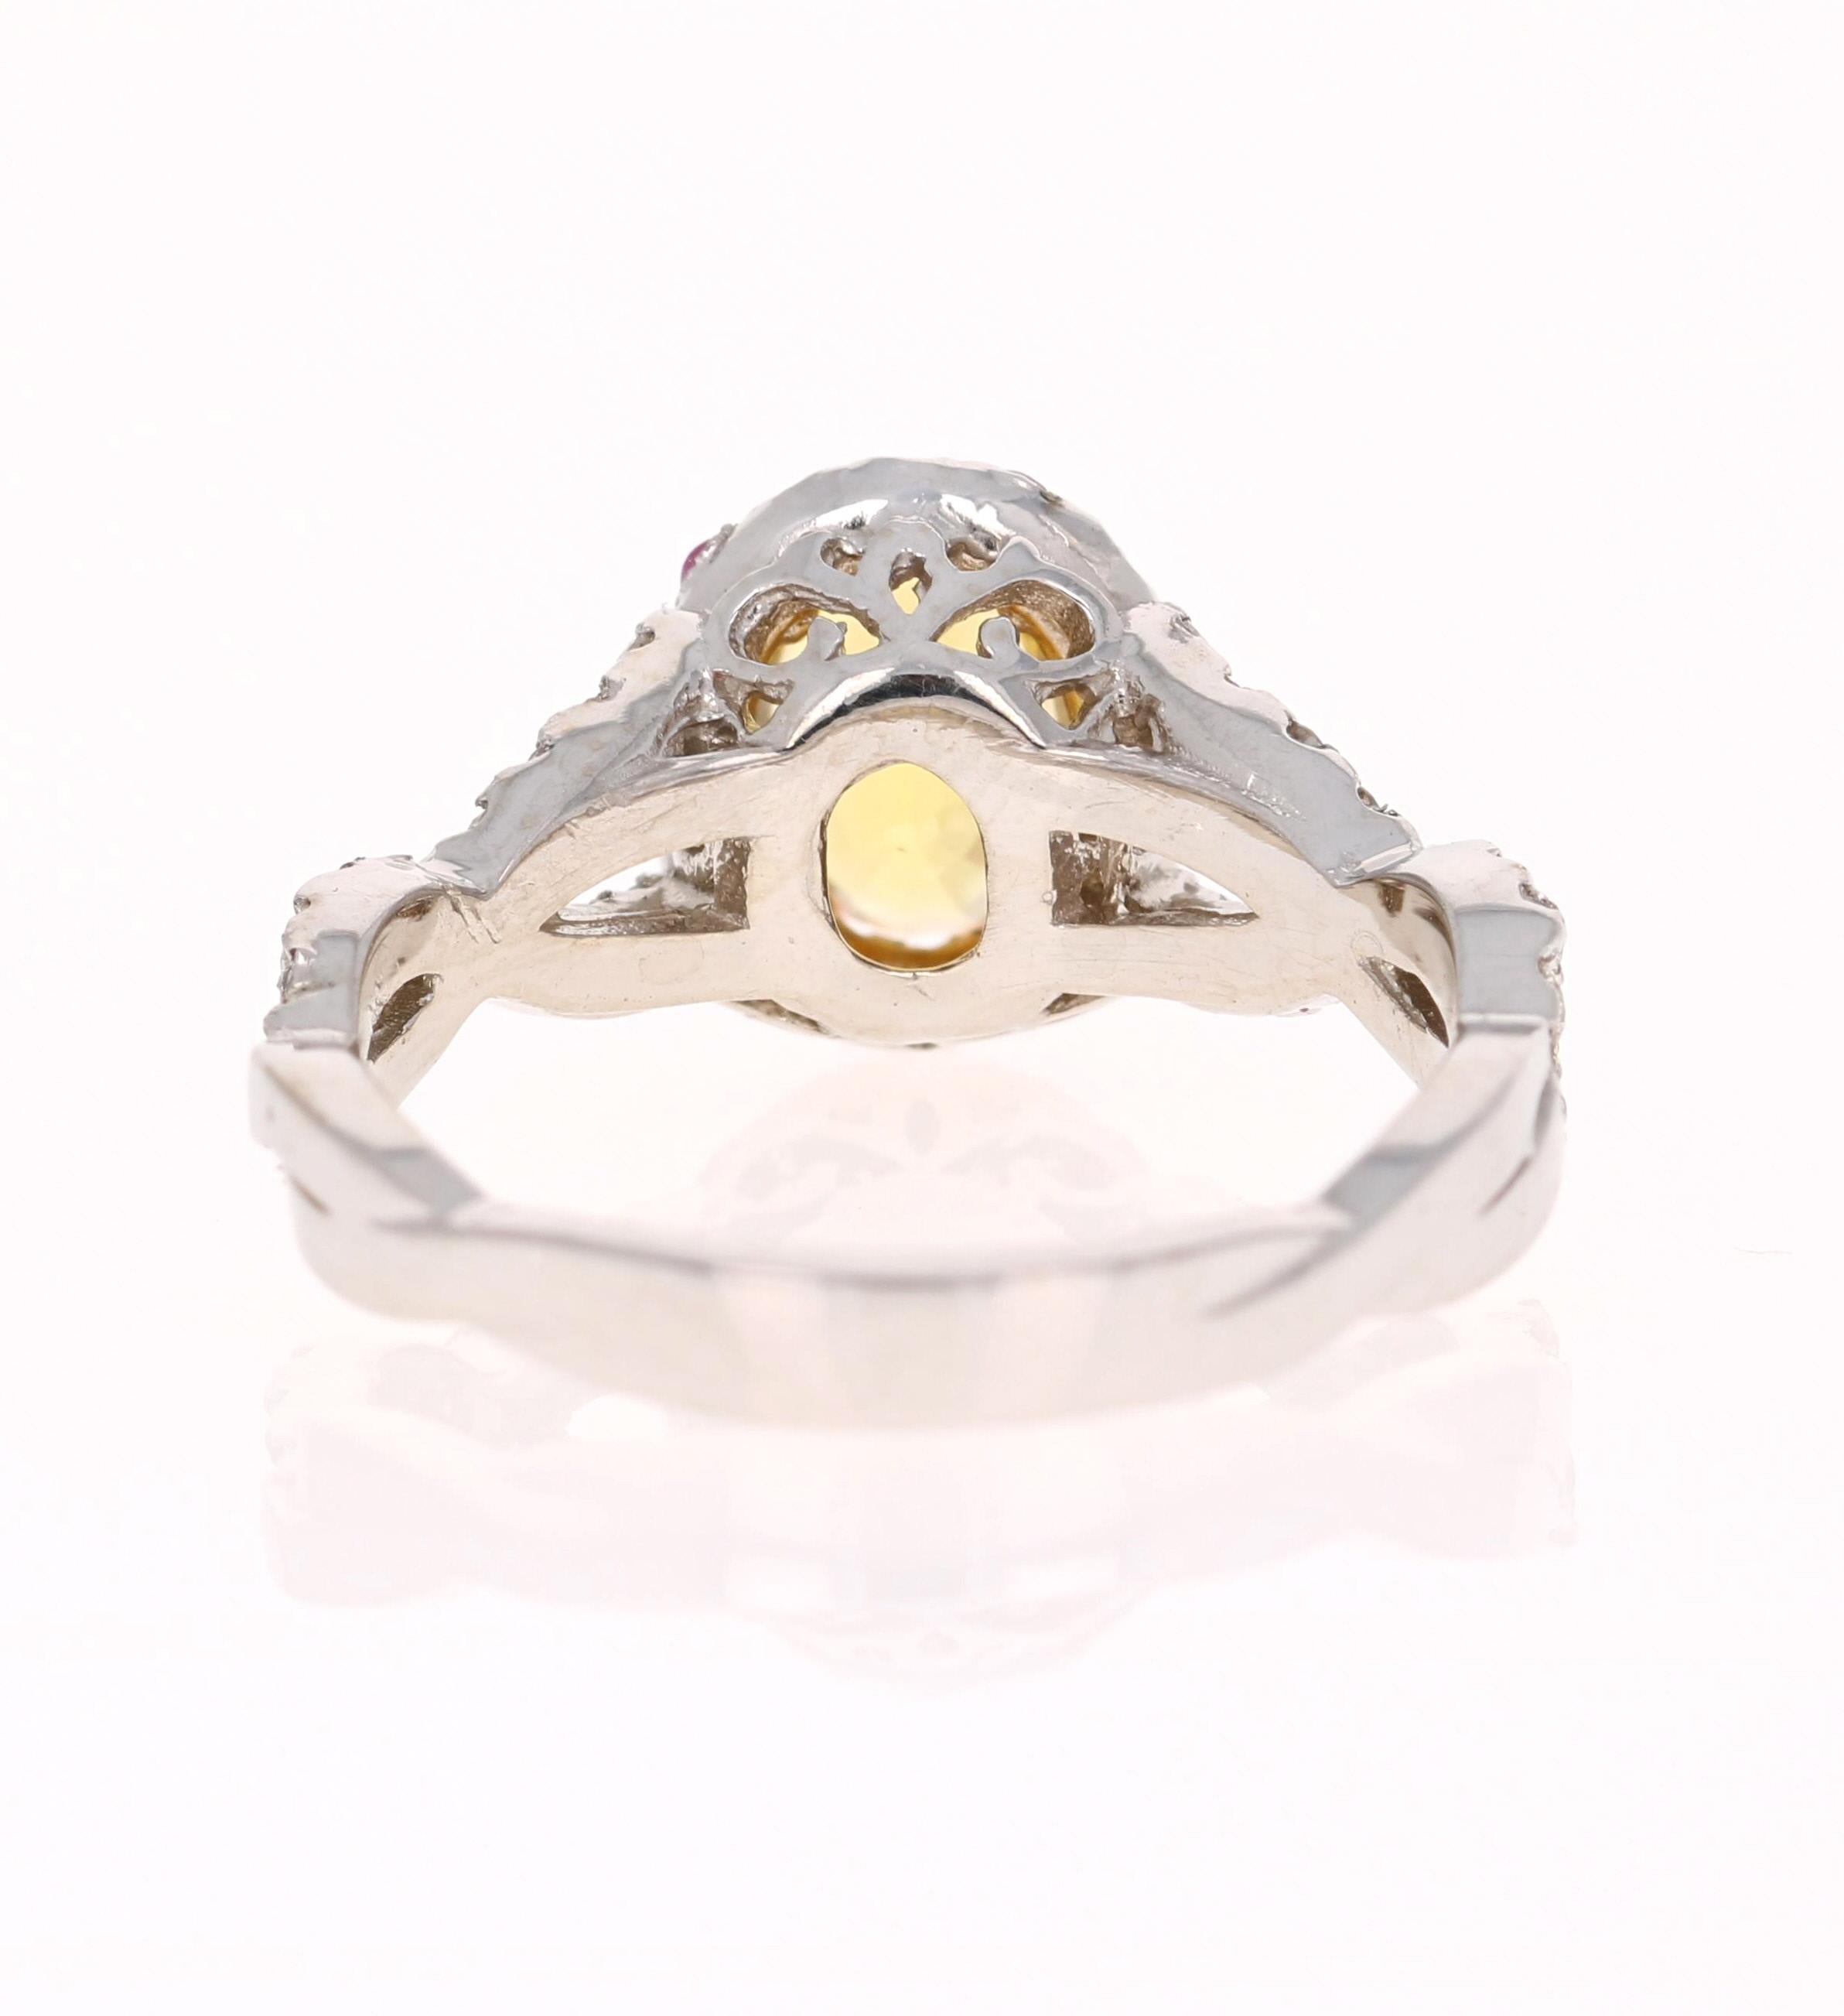 Oval Cut 2.15 Carat Yellow Pink Sapphire Diamond 14 Karat White Gold Ring For Sale